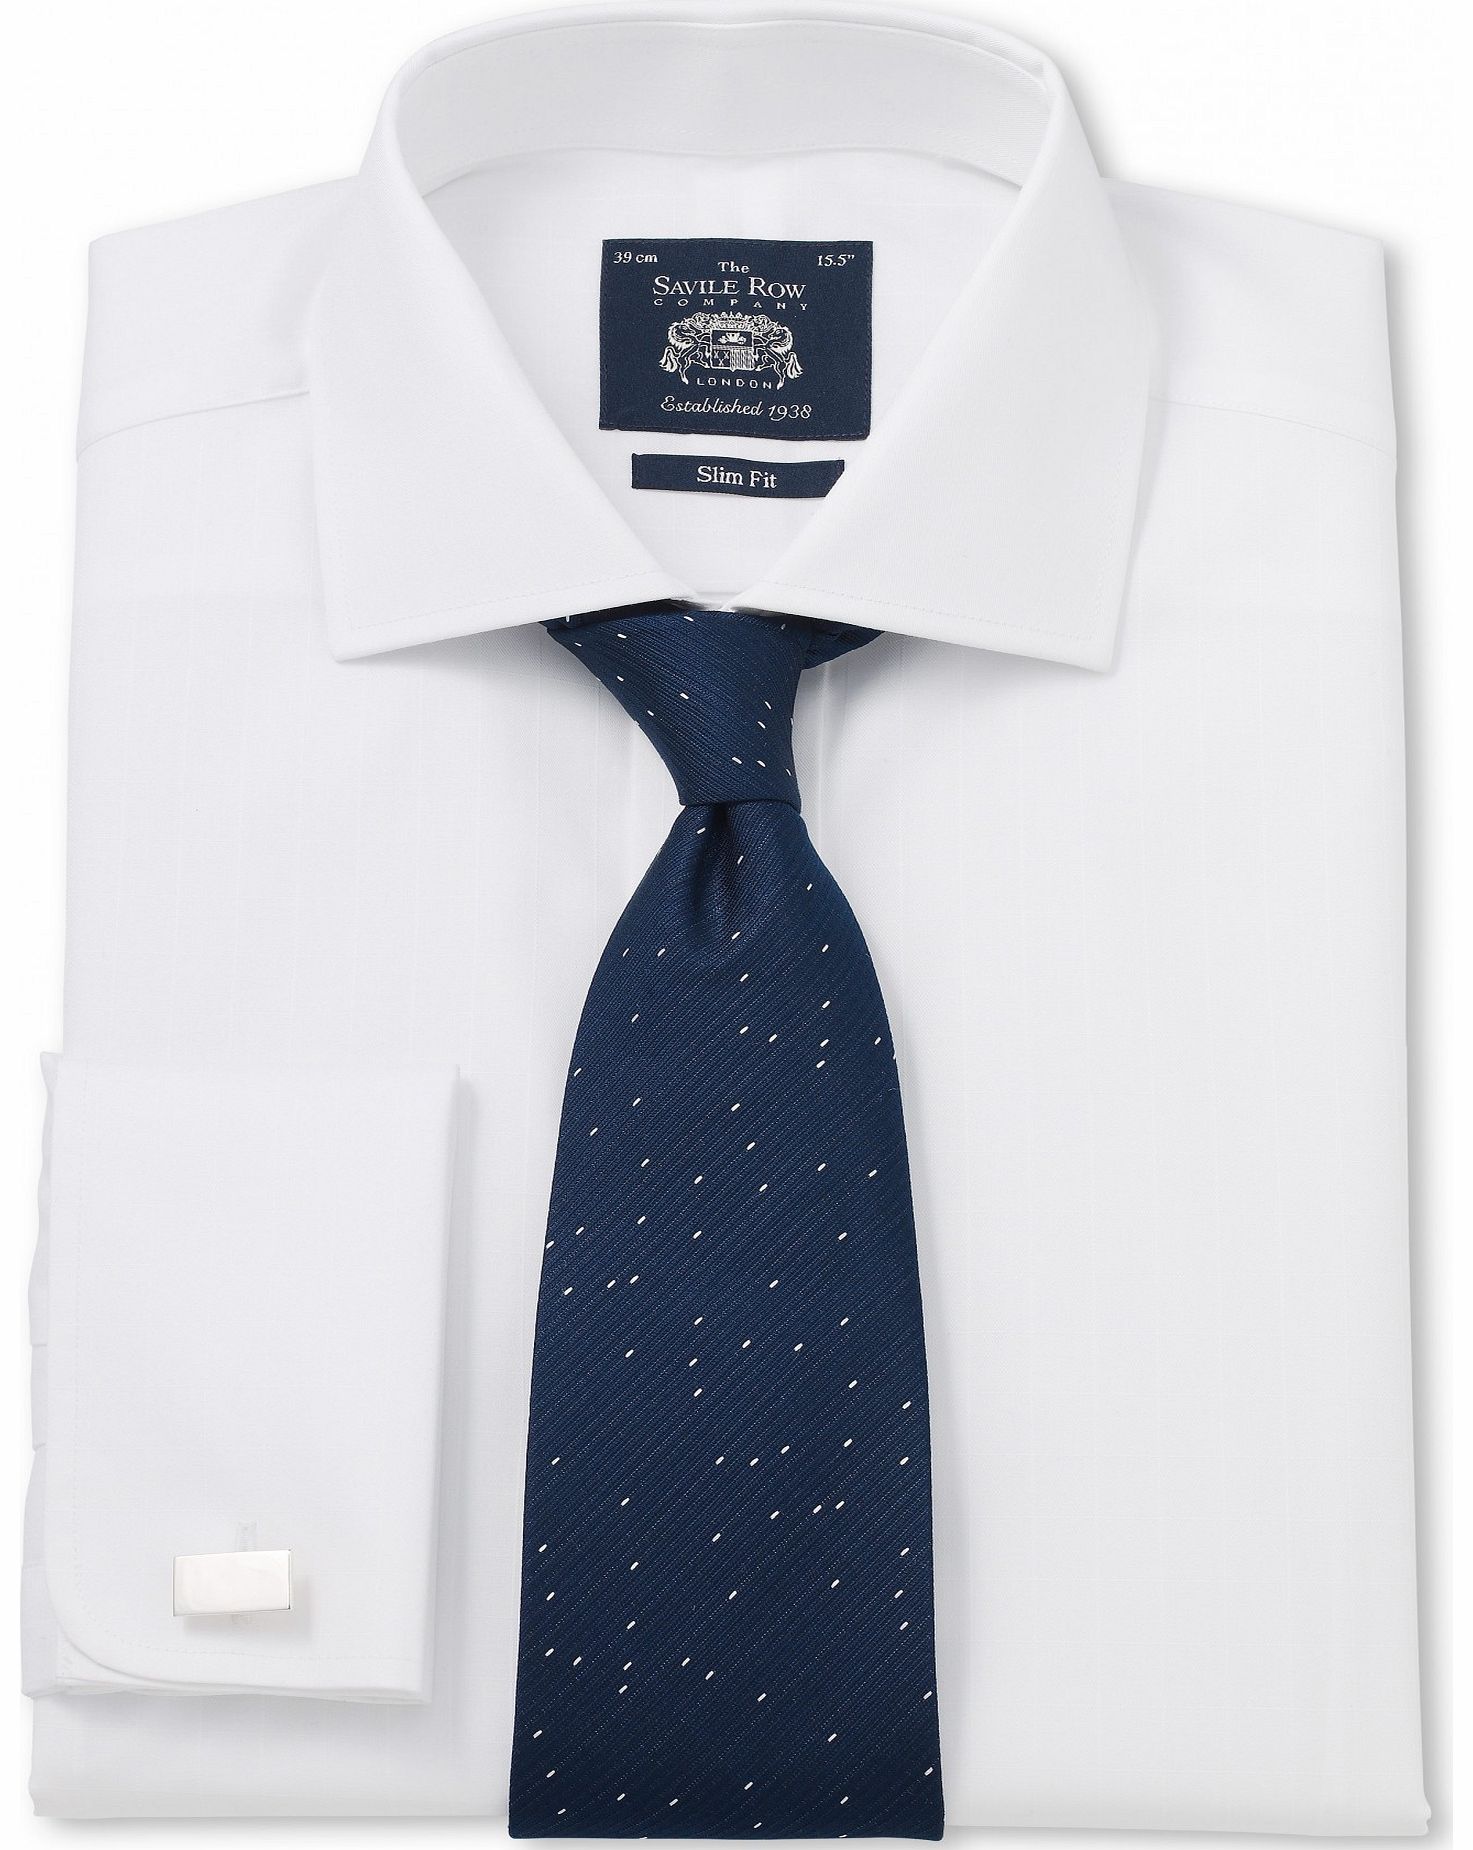 Savile Row Company White Poplin Check Slim Fit Shirt 16 1/2``